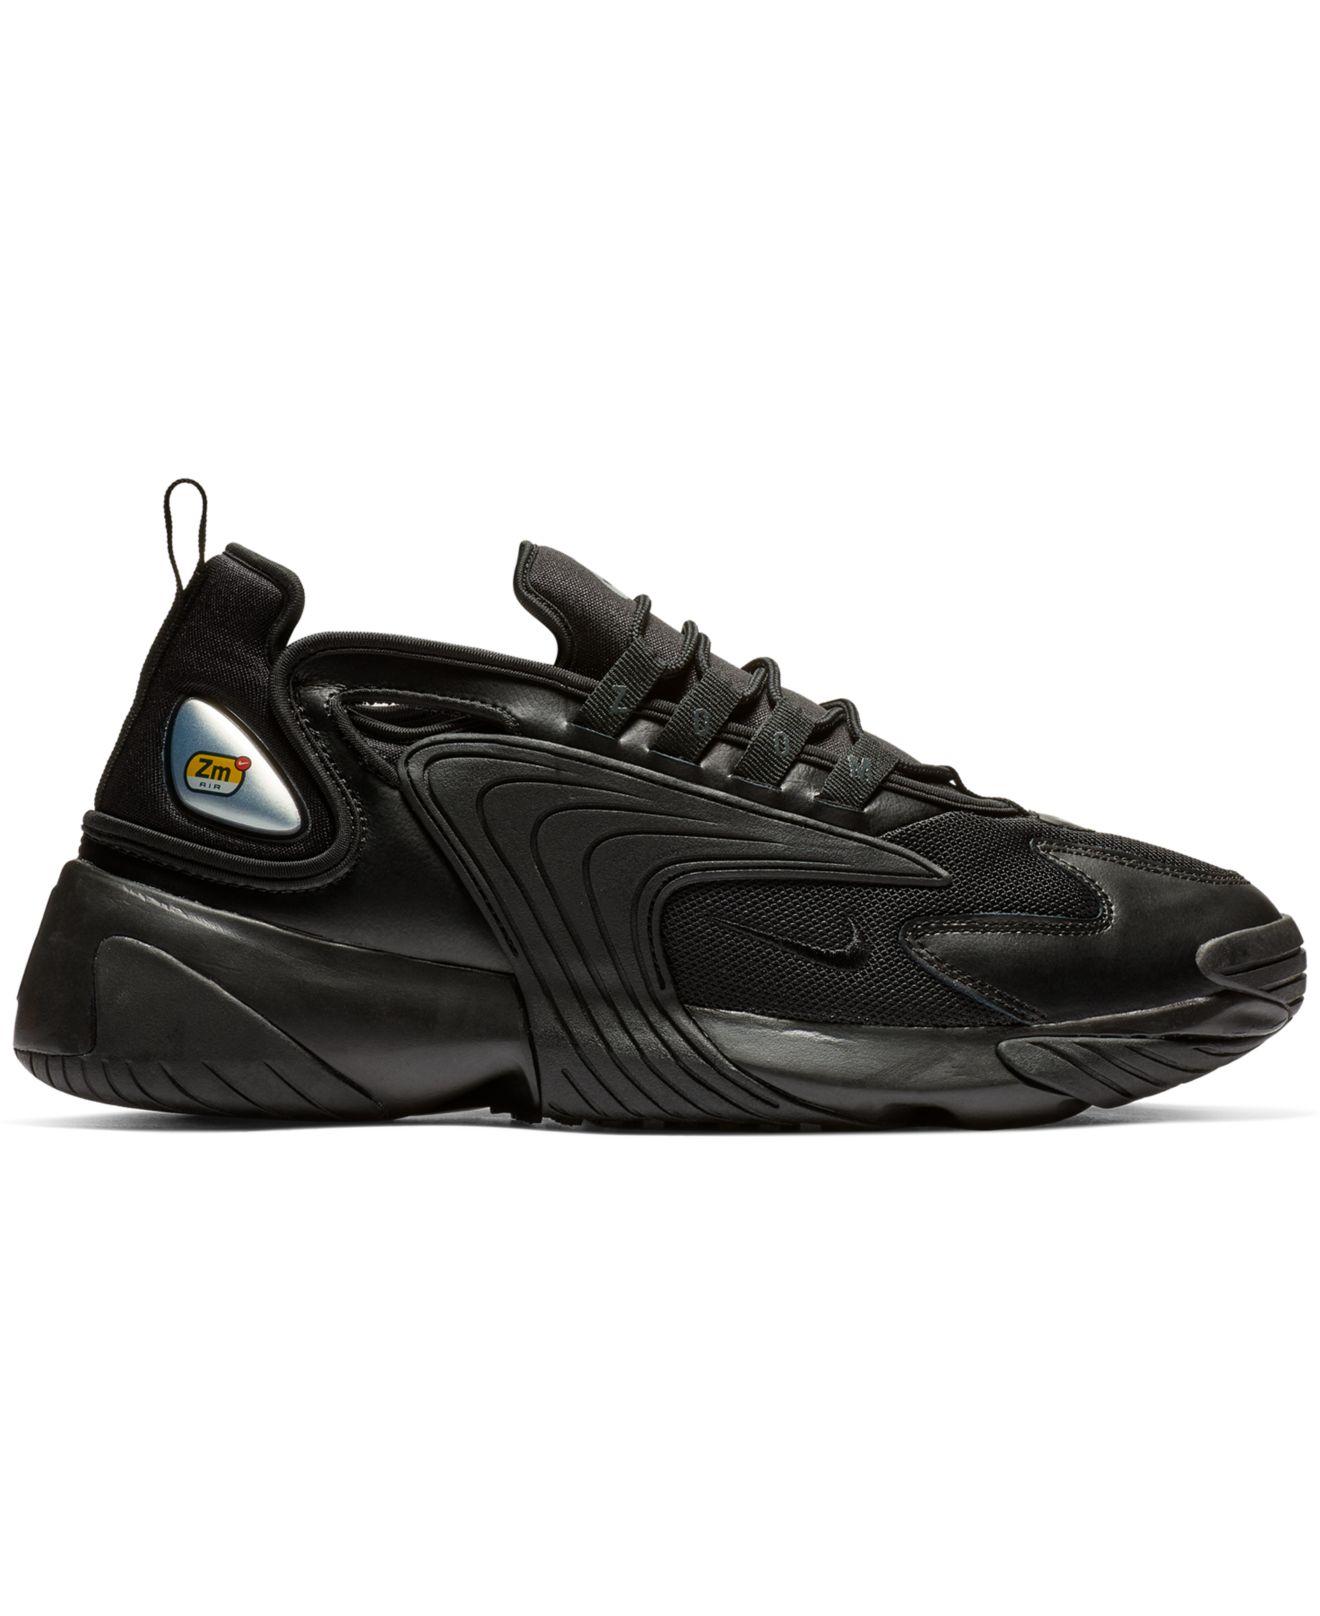 Nike Zoom 2k Shoe in Black/Anthracite (Black) for Men - Lyst